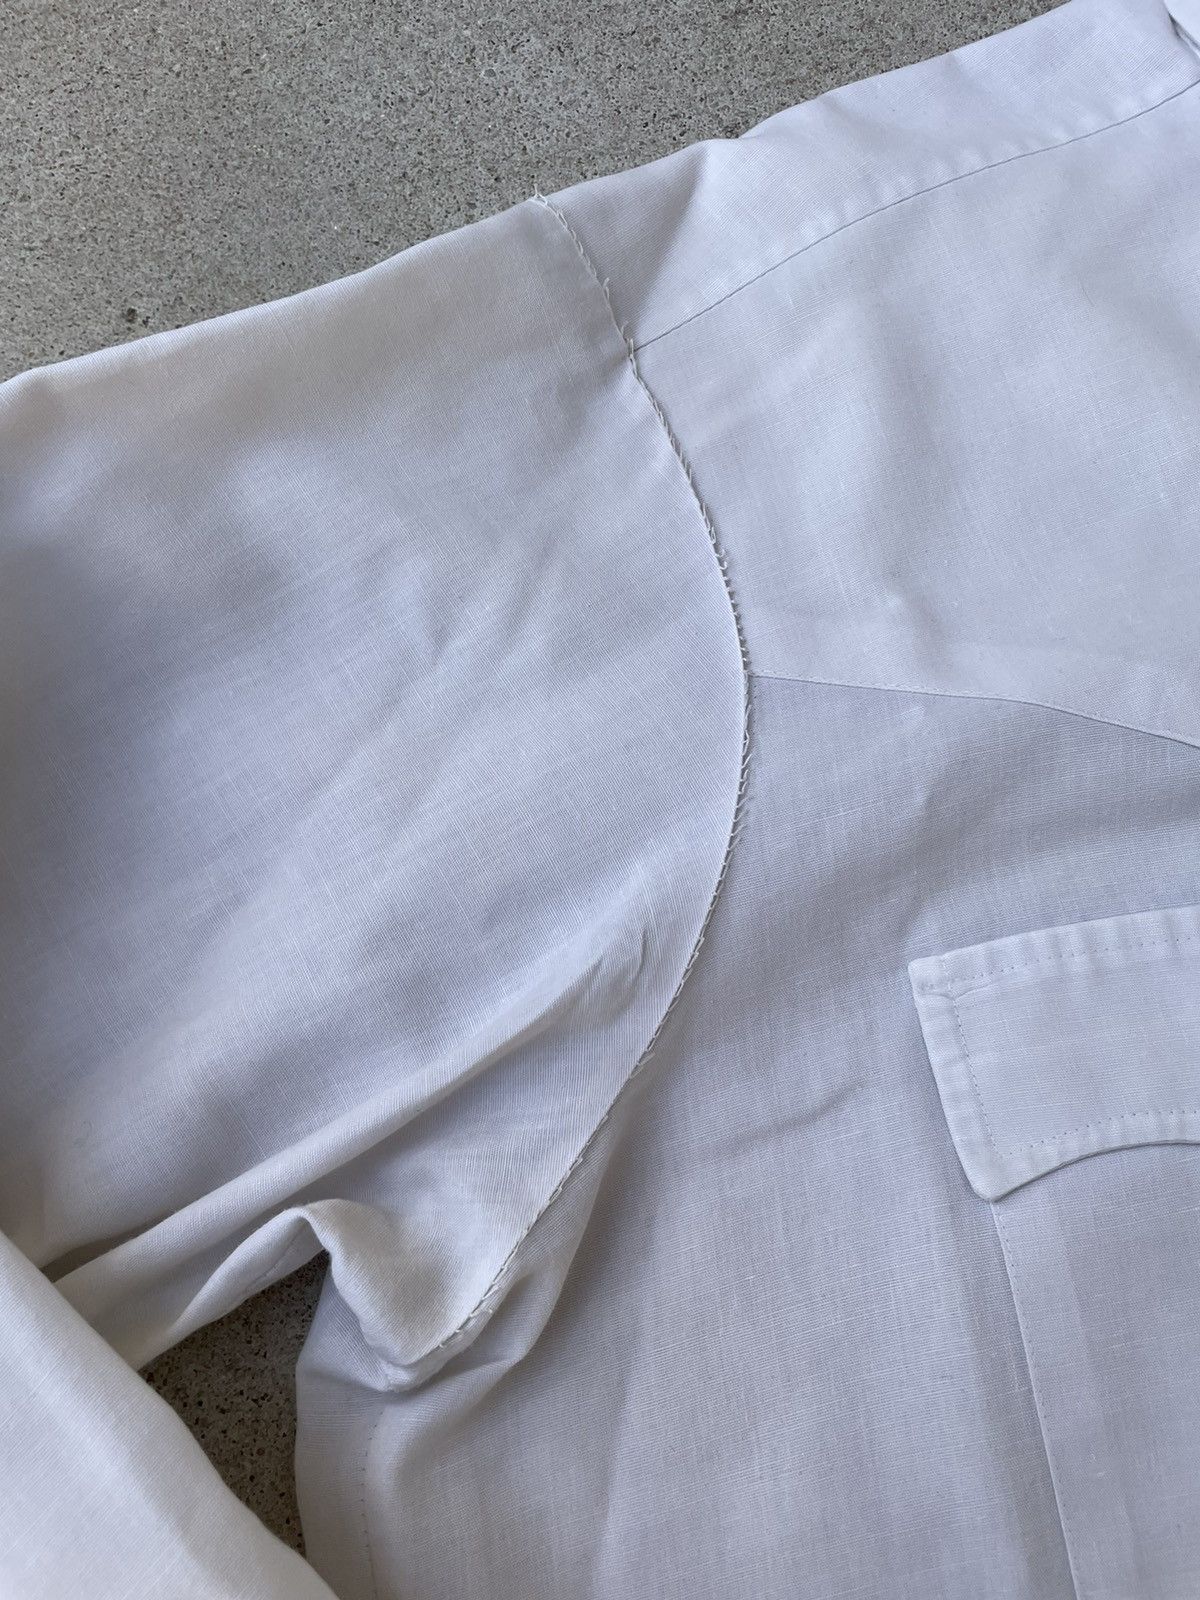 Vintage Vtg 80s Levis White Tab Western Pearl Snap Buttoned Shirt XL Size US XL / EU 56 / 4 - 6 Thumbnail